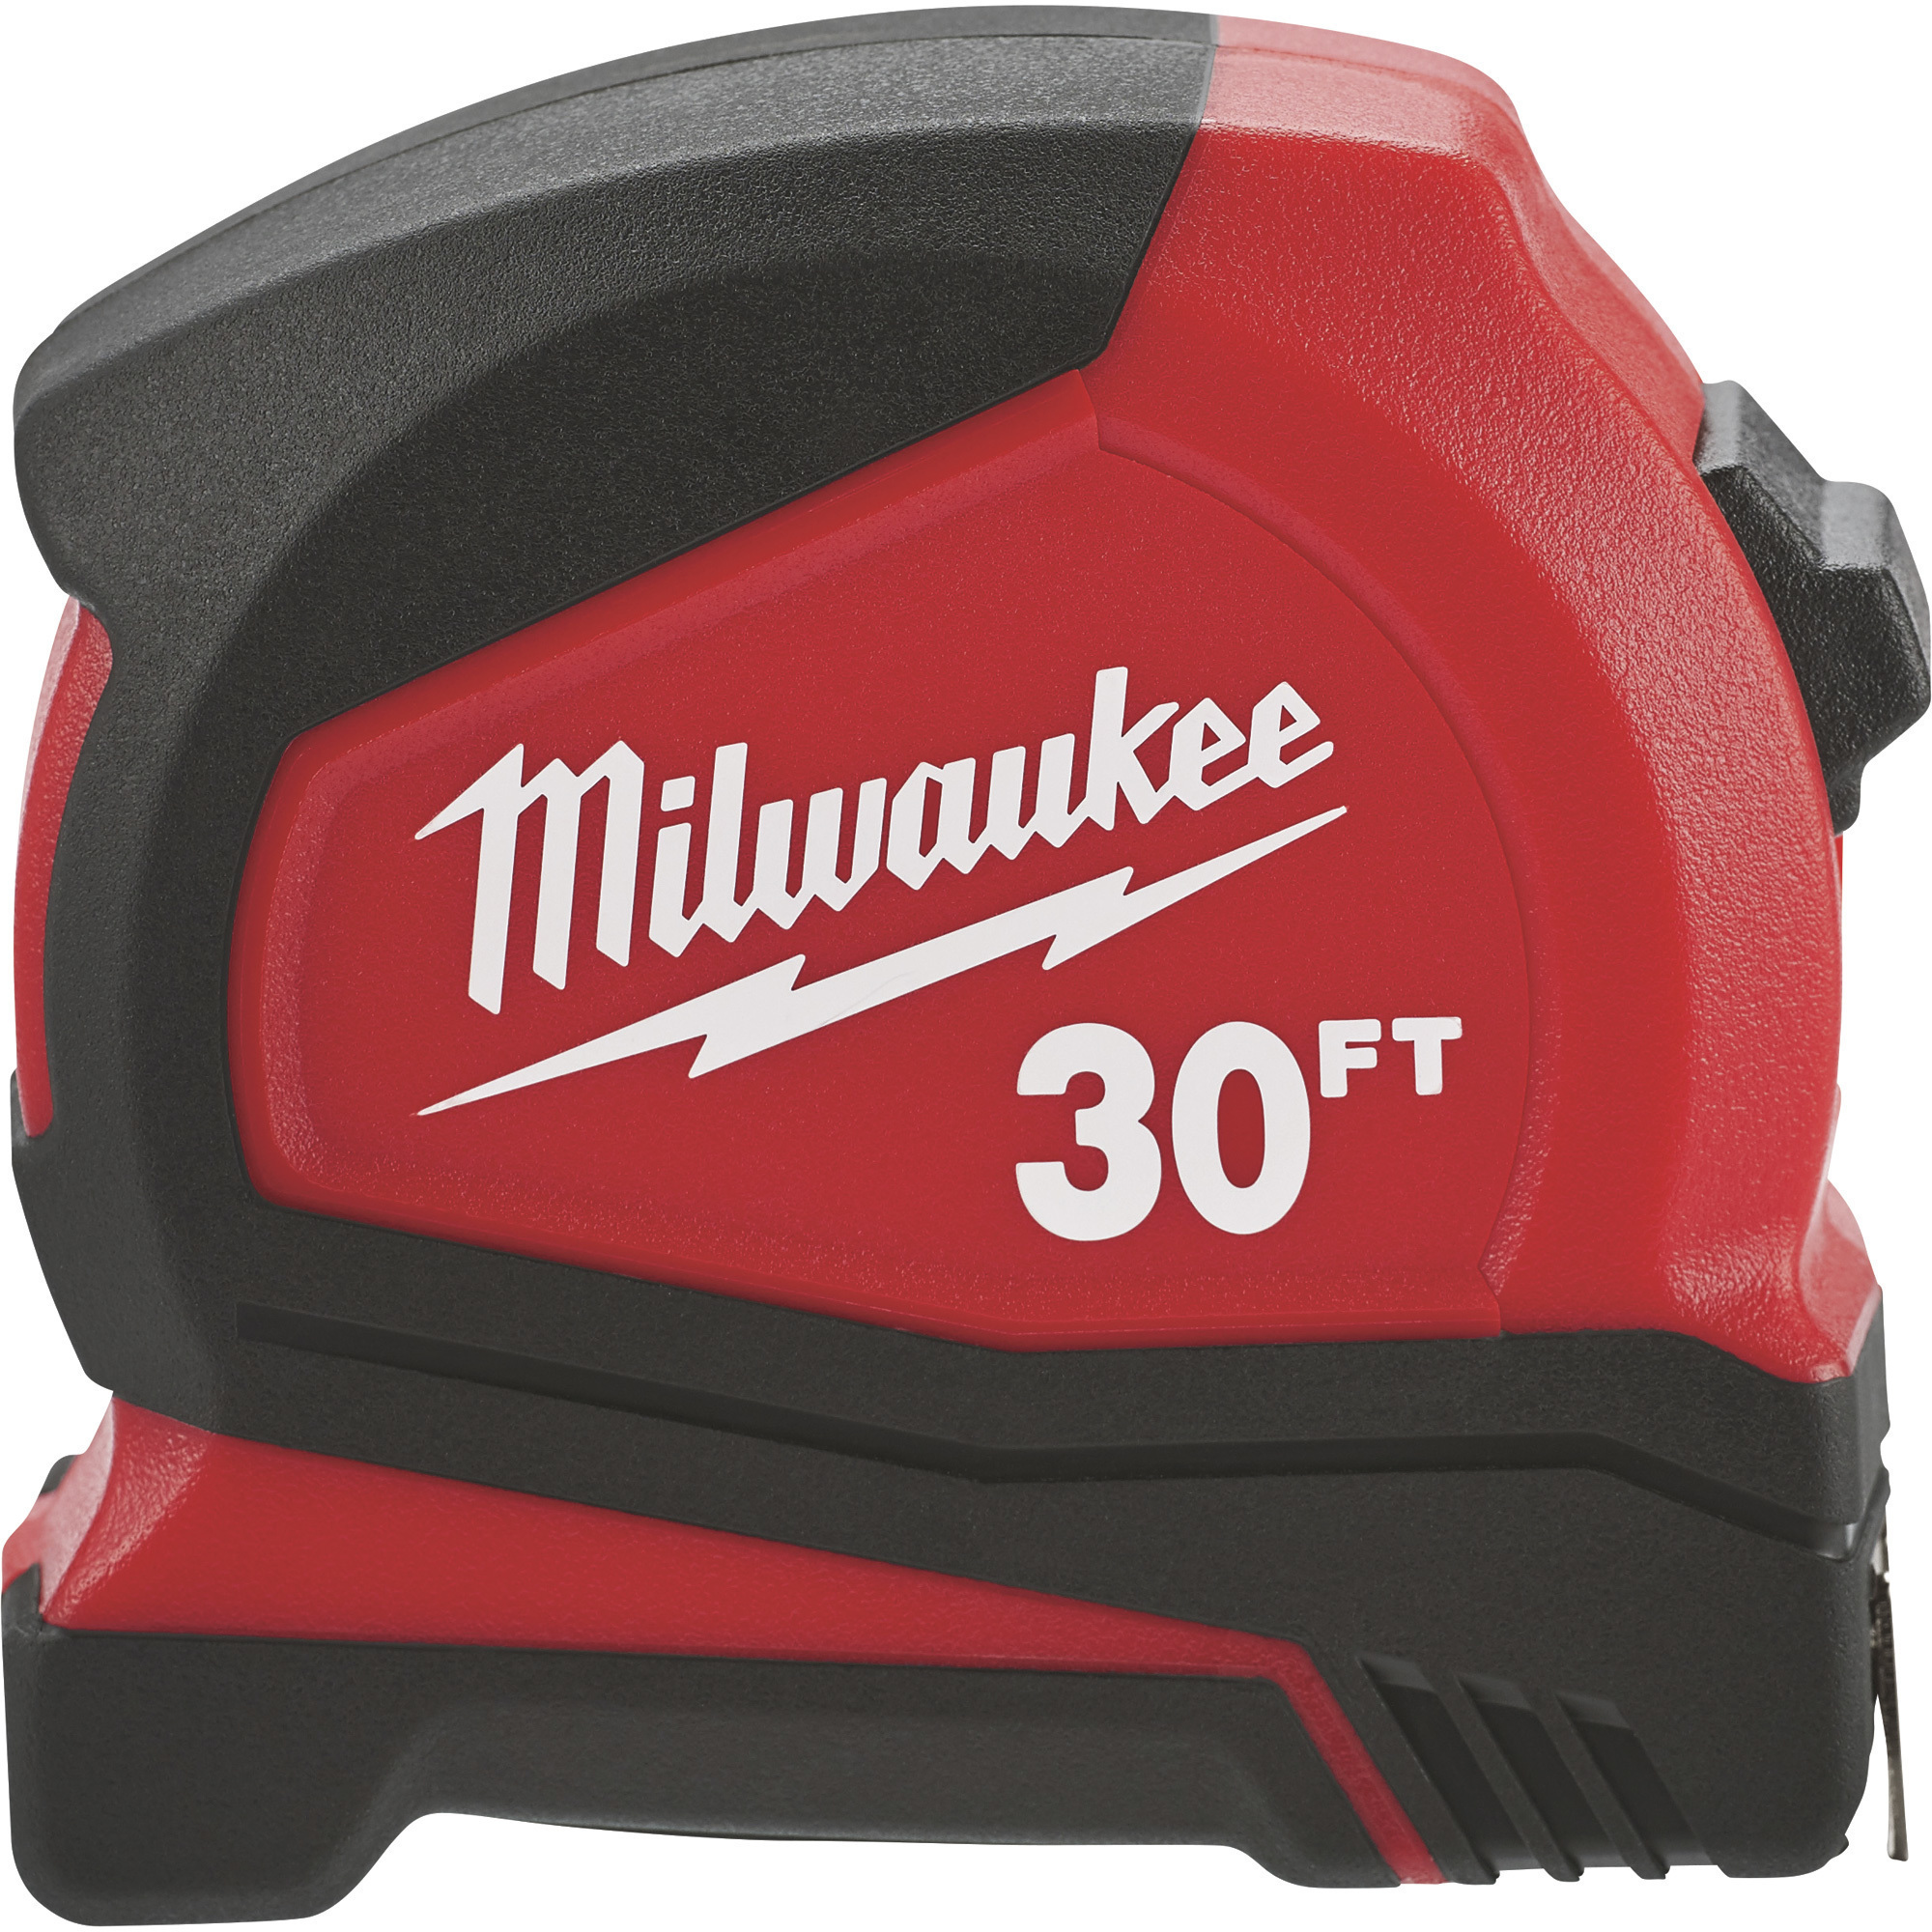 Milwaukee 30Ft. Compact Tape Measure, Model 48-22-6630